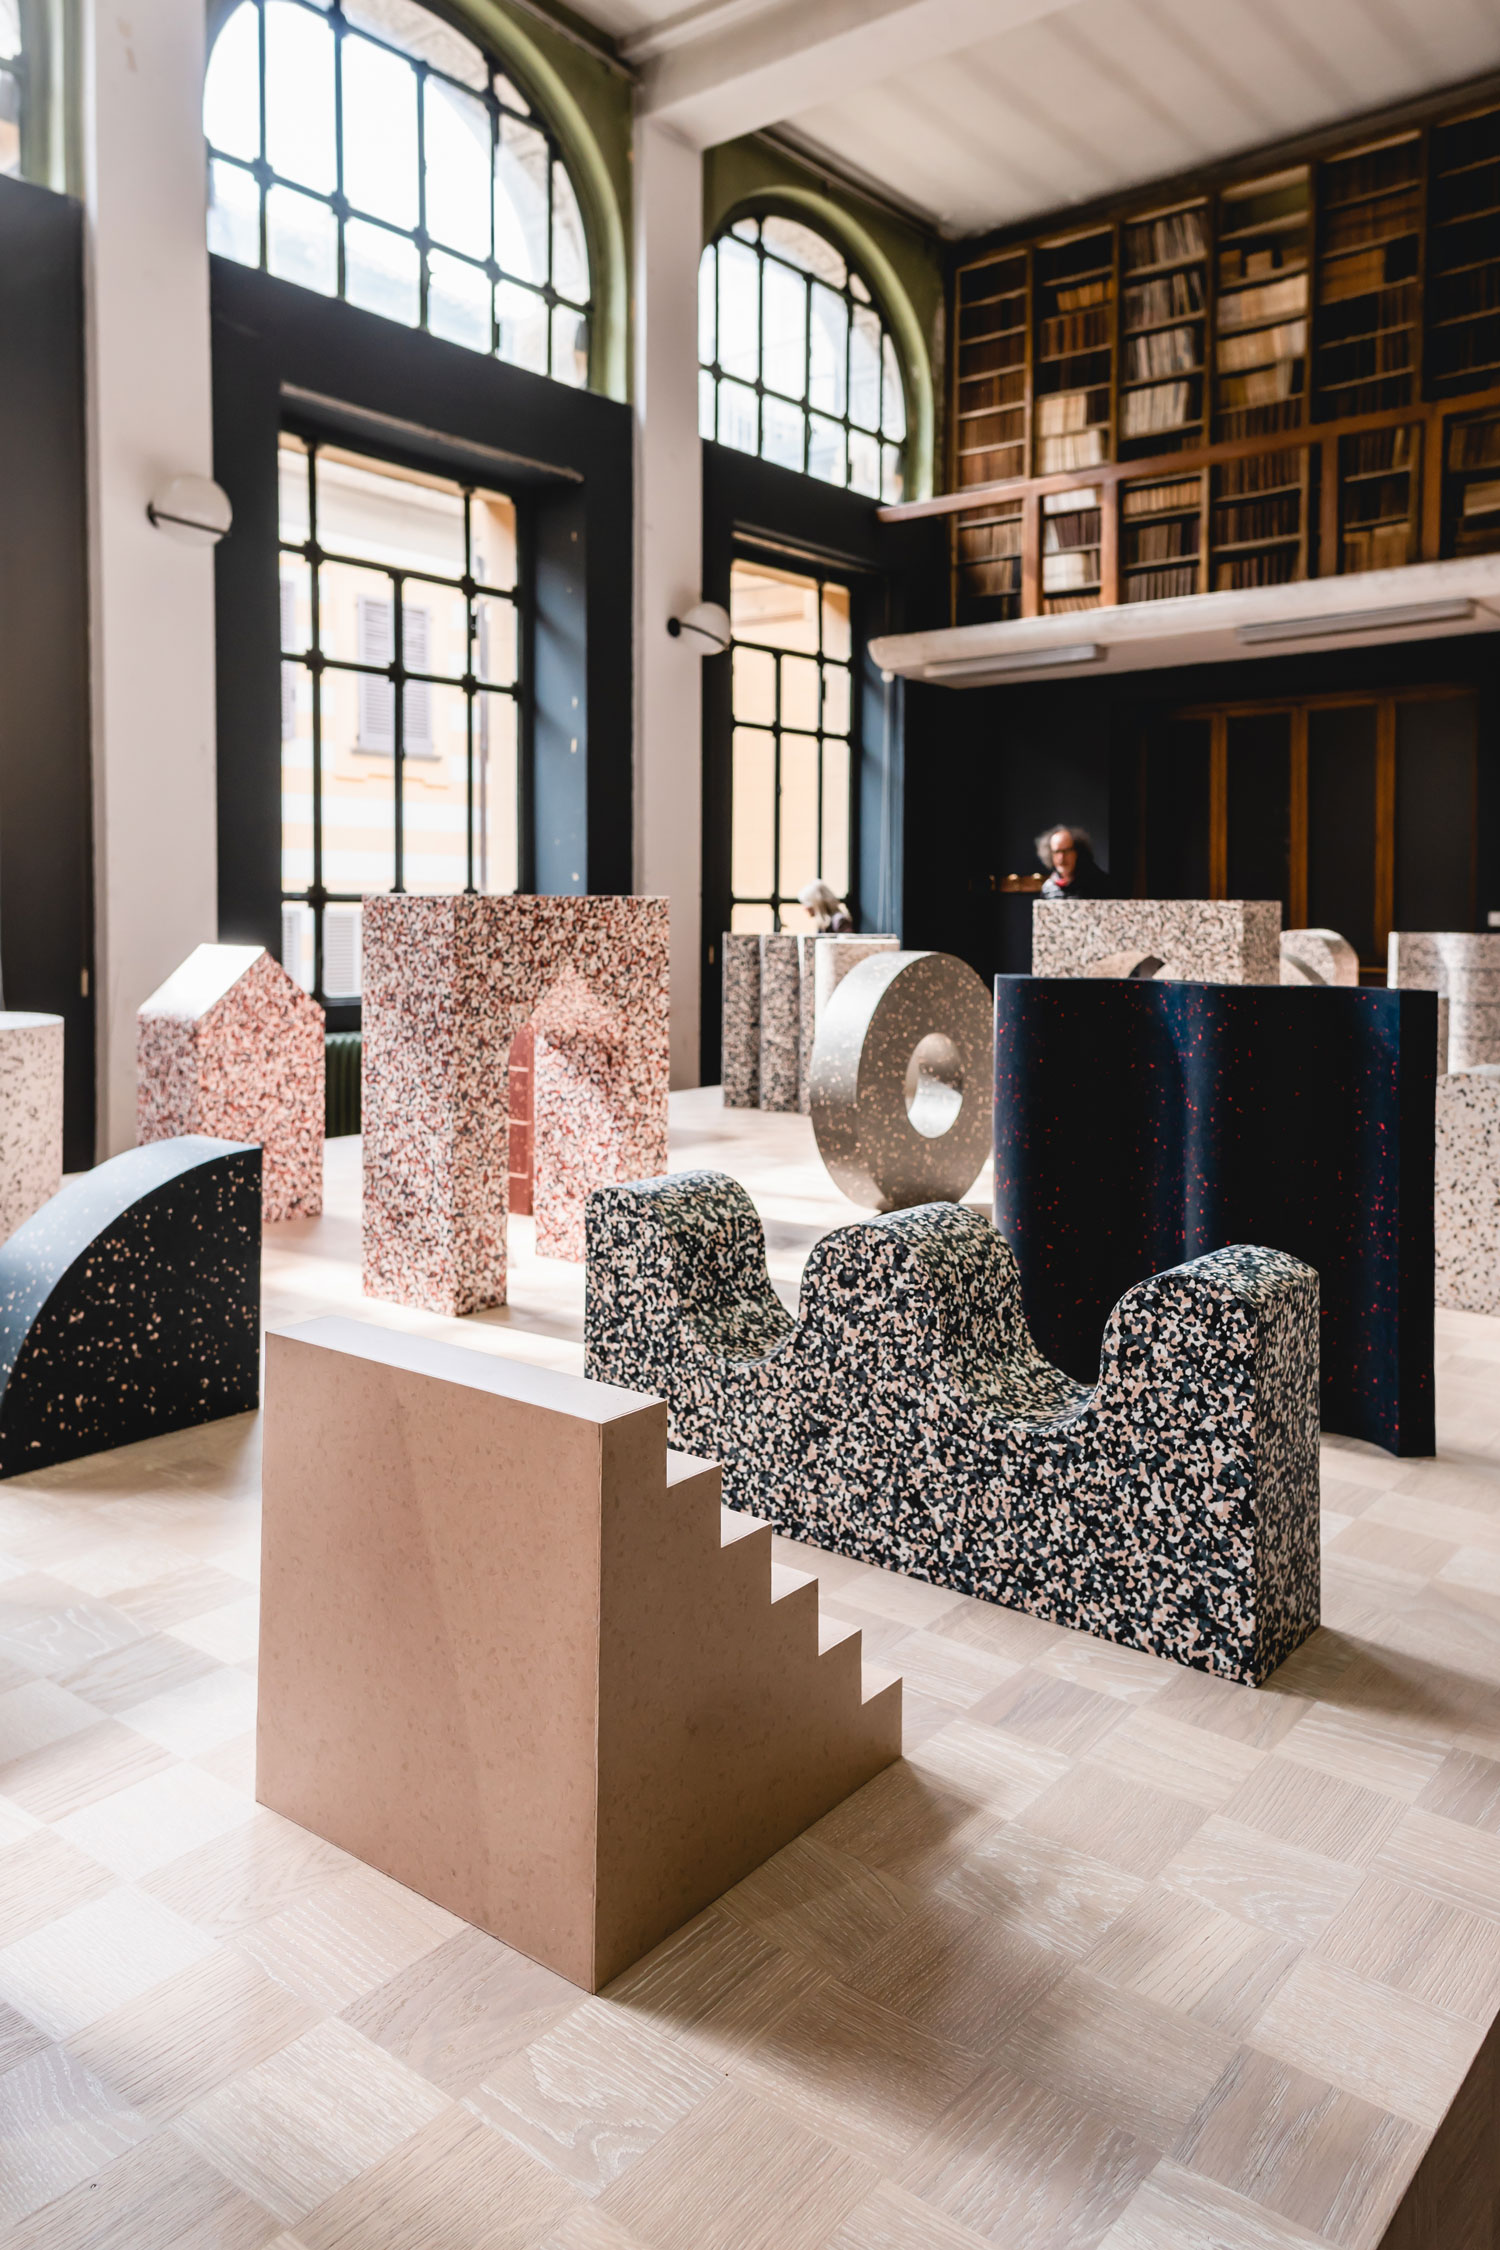 Best installations seen during milan design week 2019 - Tarkett "Formations"